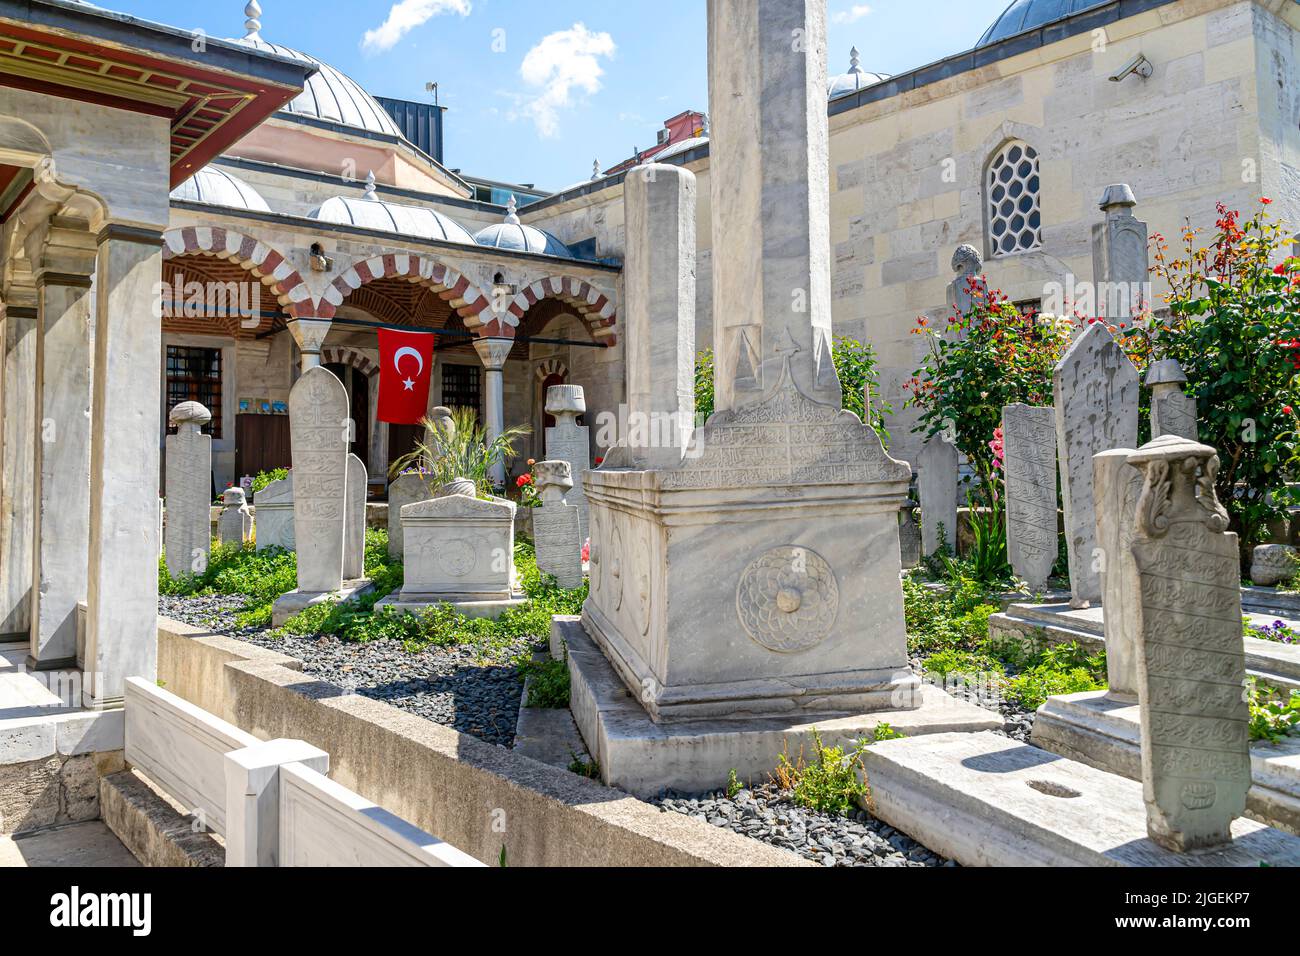 Innenhof, Friedhof Koca Sinan Pasa Moschee Komplex - Gebäudekomplex in Fatih, Istanbul, Türkei Stockfoto